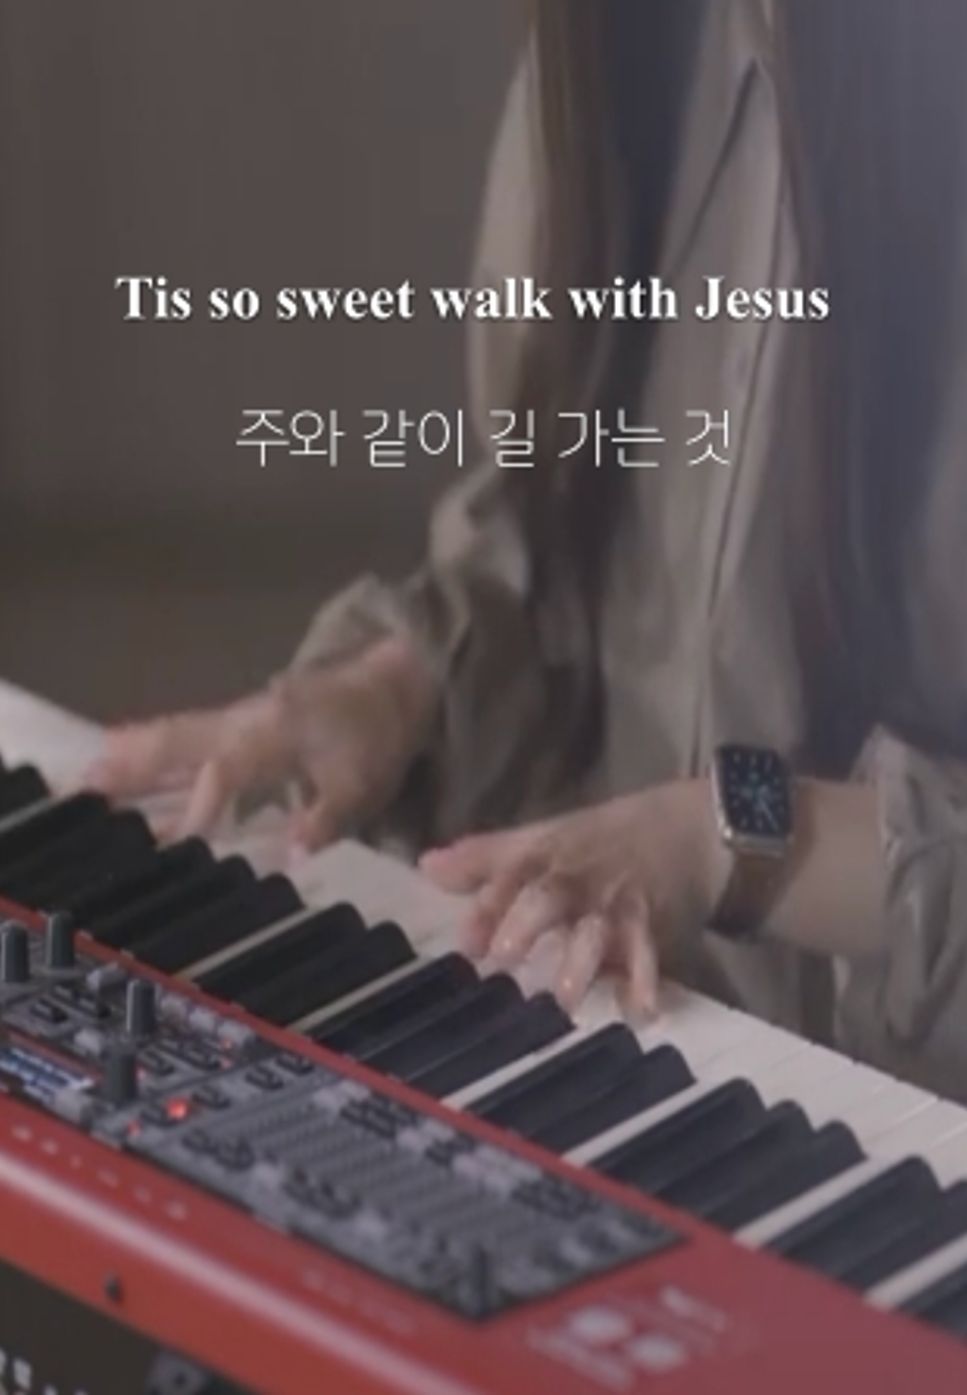 Albert Benjamin Simpson - 주와 같이 길 가는 것 Tis so sweet walk with Jesus by Choi Chanmi